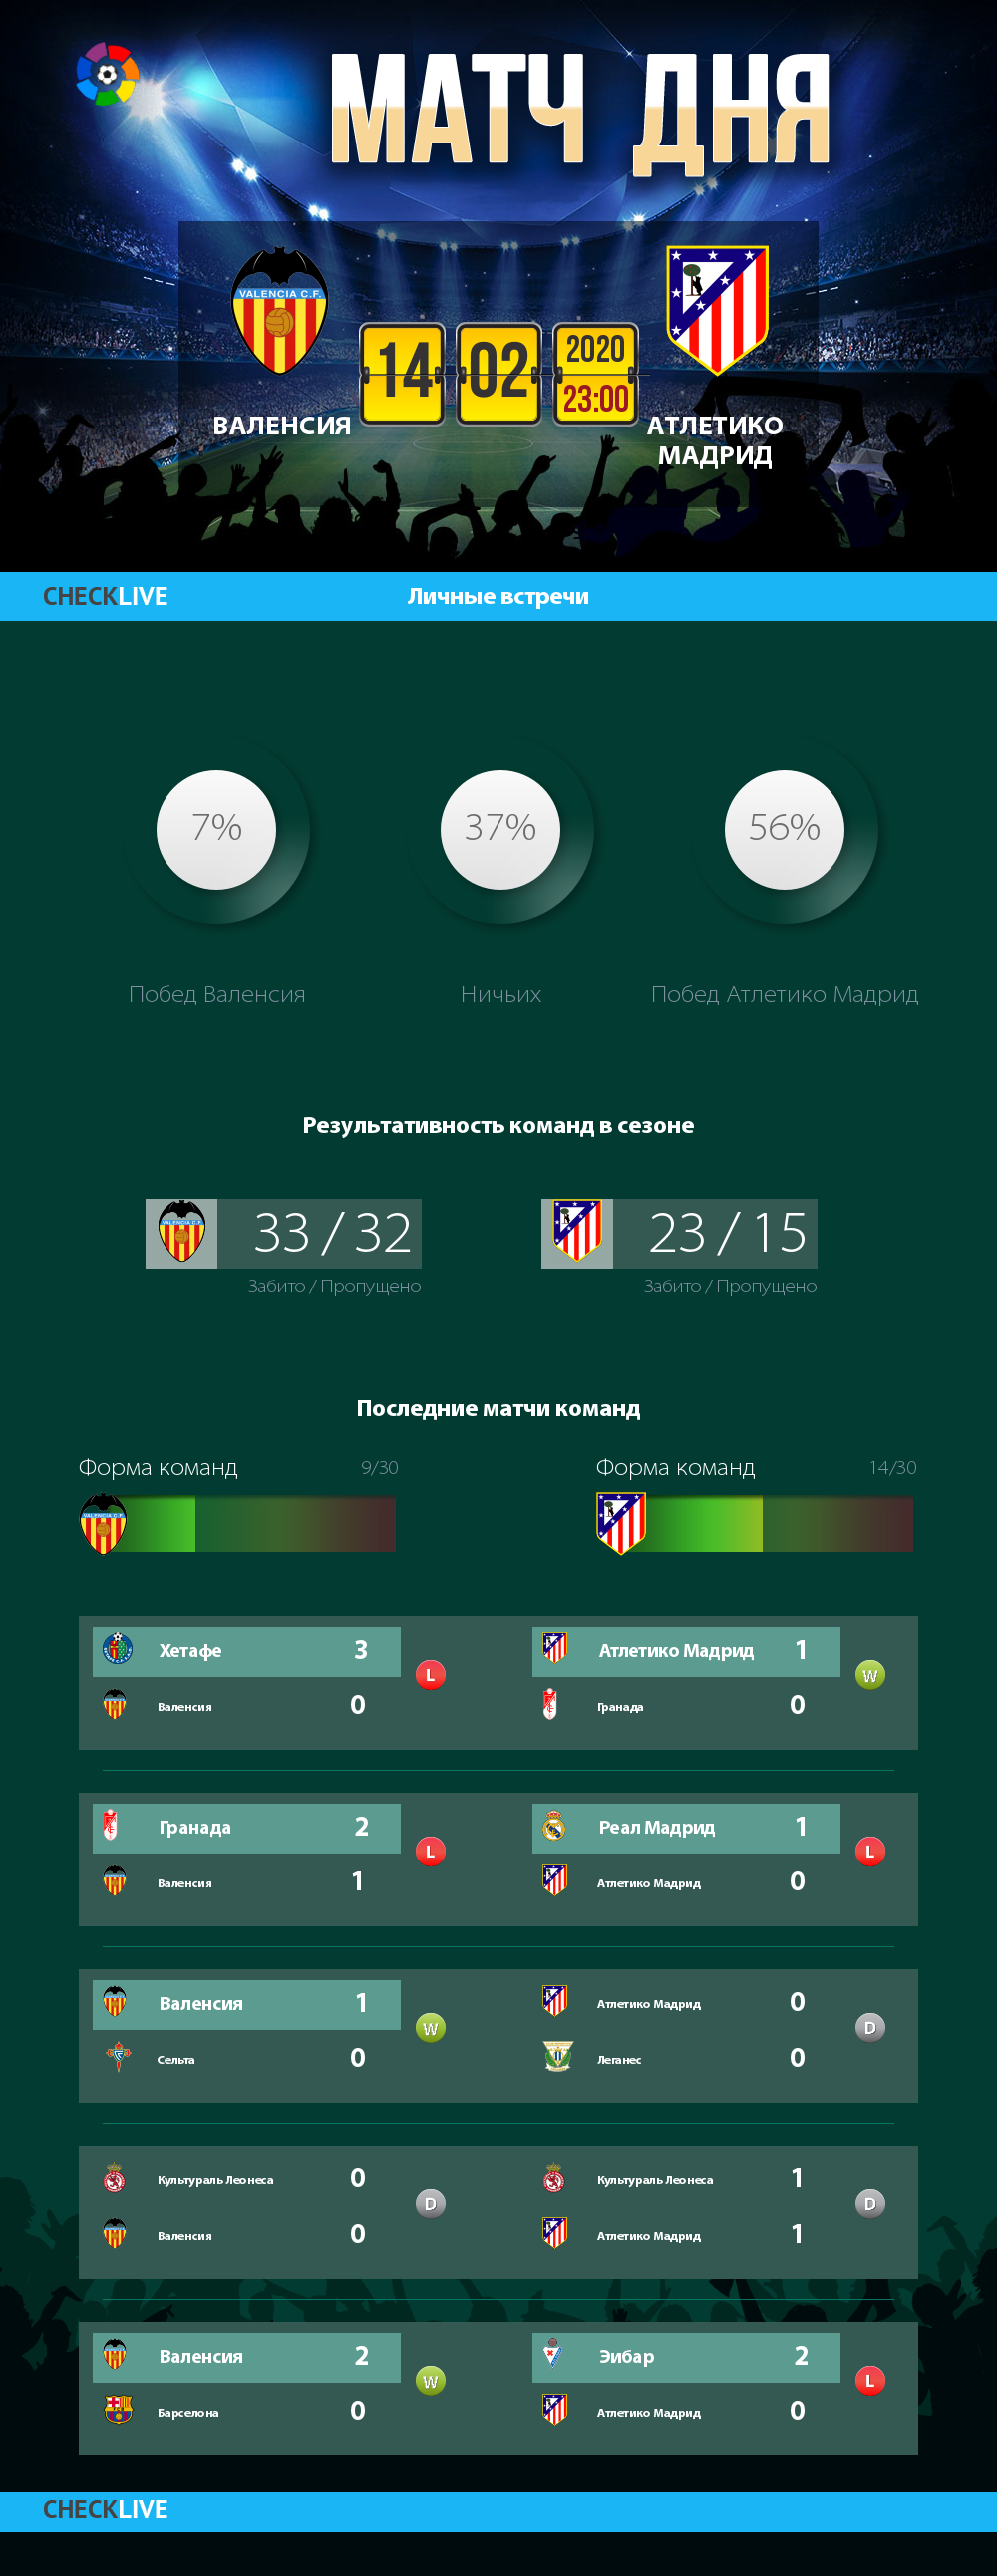 Инфографика Валенсия и Атлетико Мадрид матч дня 14.02.2020